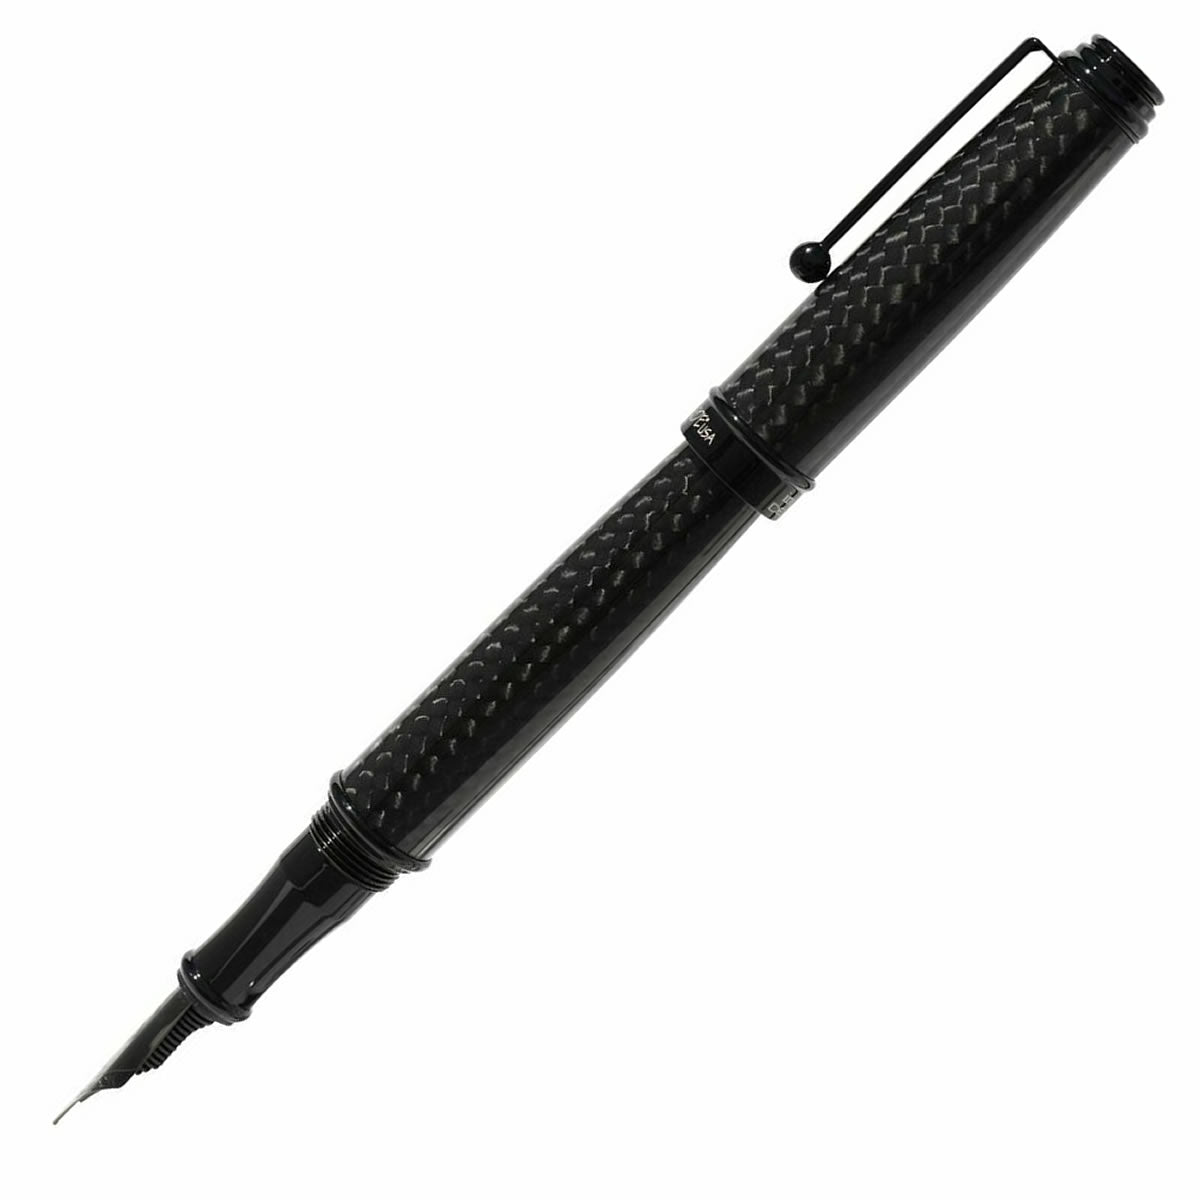 Monteverde Invincia Deluxe Black Carbon Fibre Fountain Pen